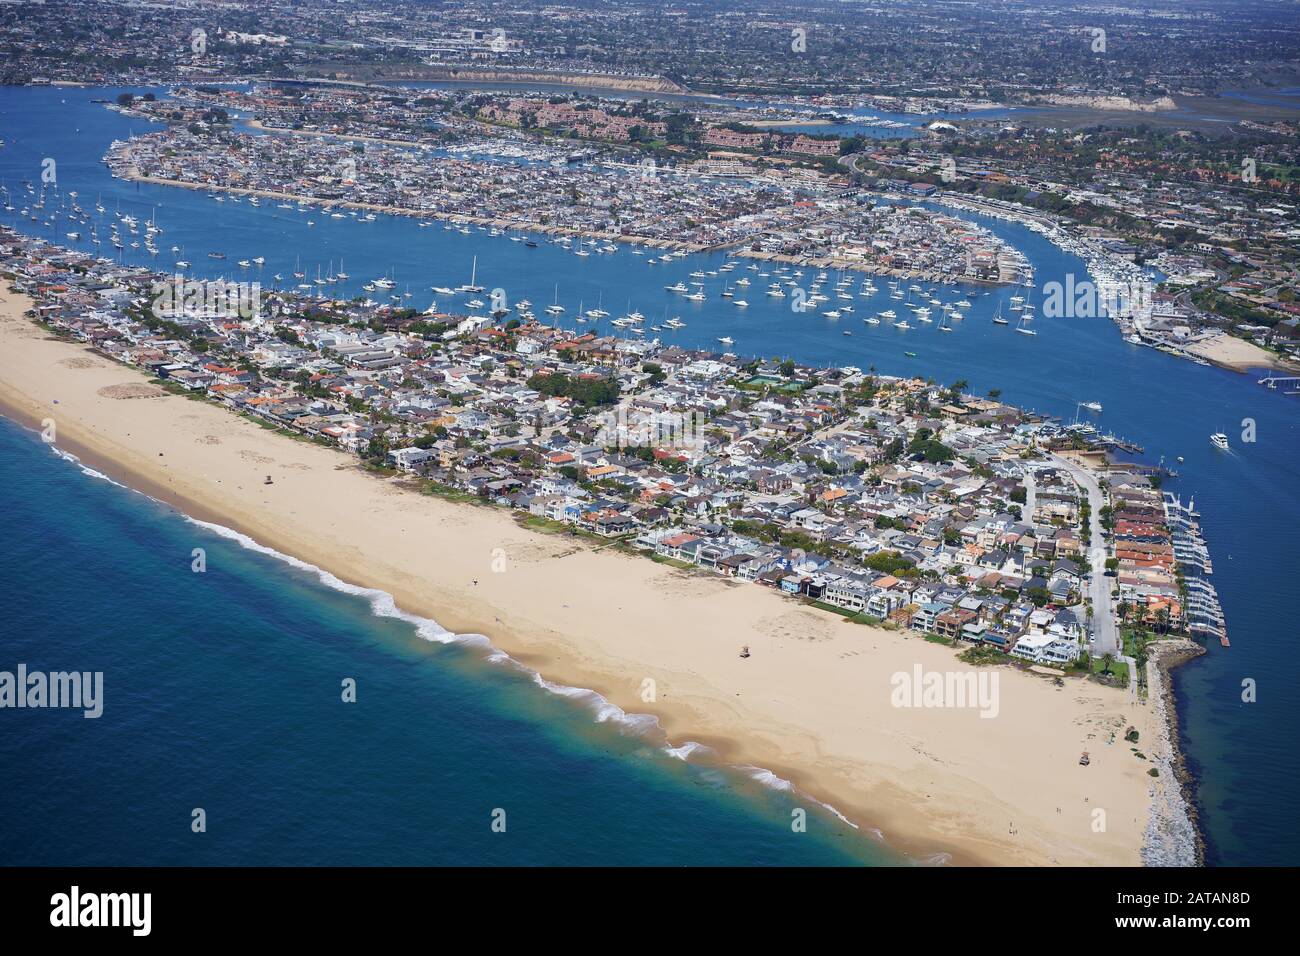 LUFTAUFNAHME. Balboa Peninsula mit Lido Isle hinter dem Hauptkanal. Newport Beach, Orange County, Kalifornien, USA. Stockfoto